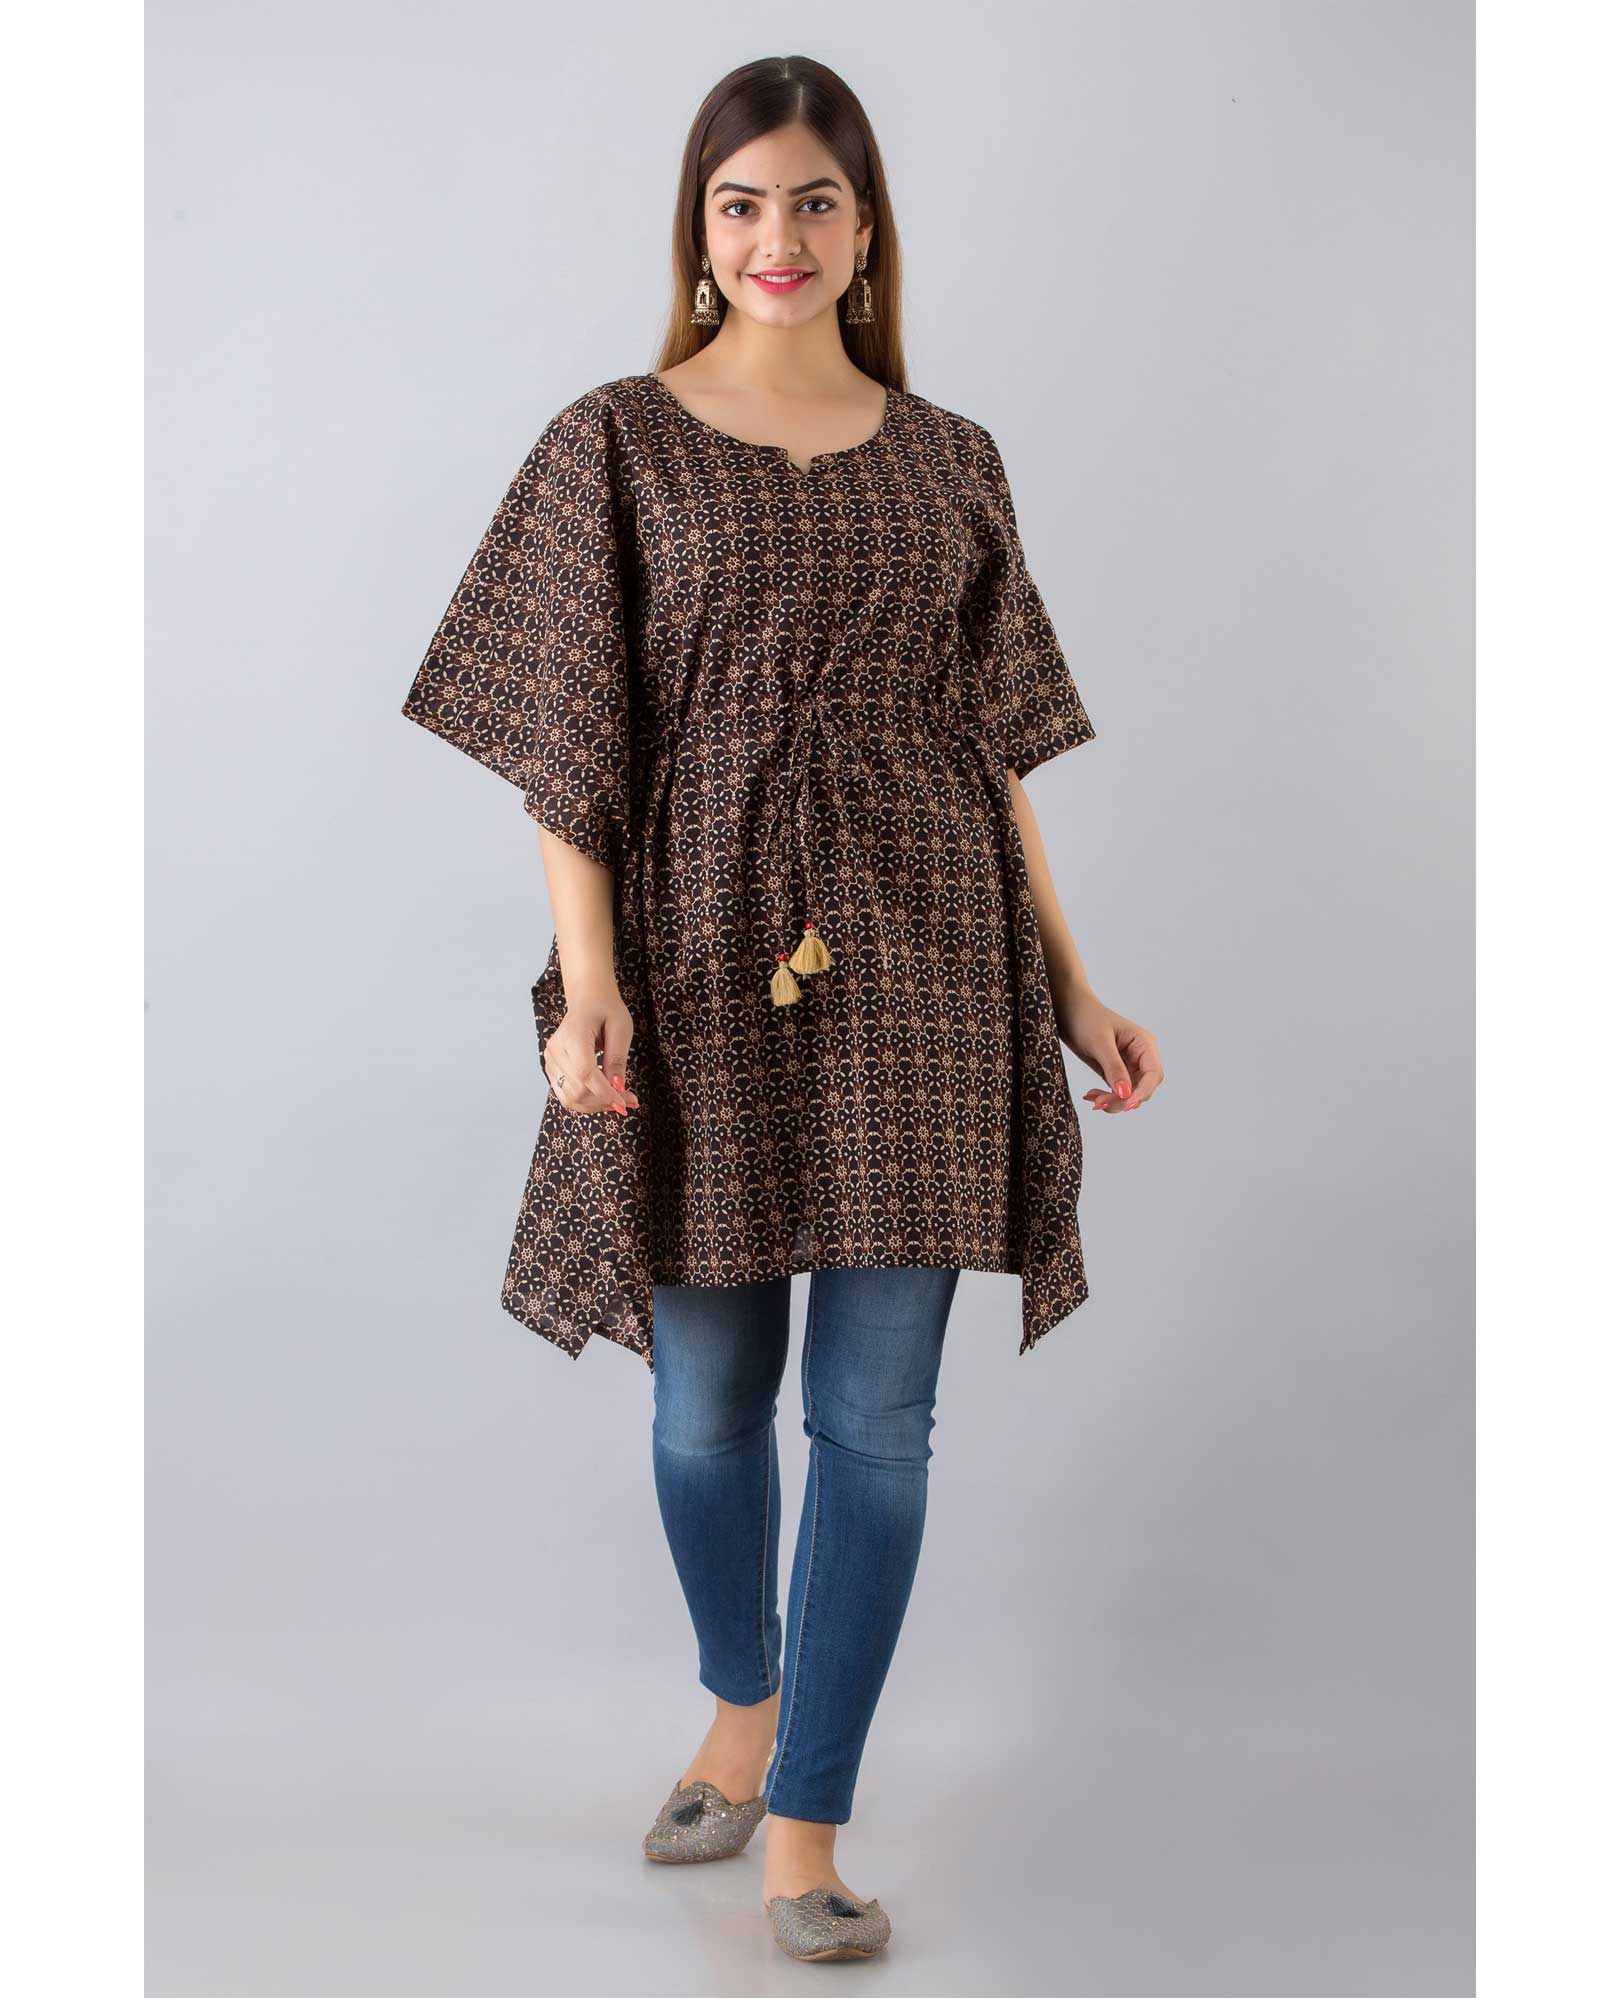 Buy kaftan dress online at best price | pratap sons in India | Clasf fashion